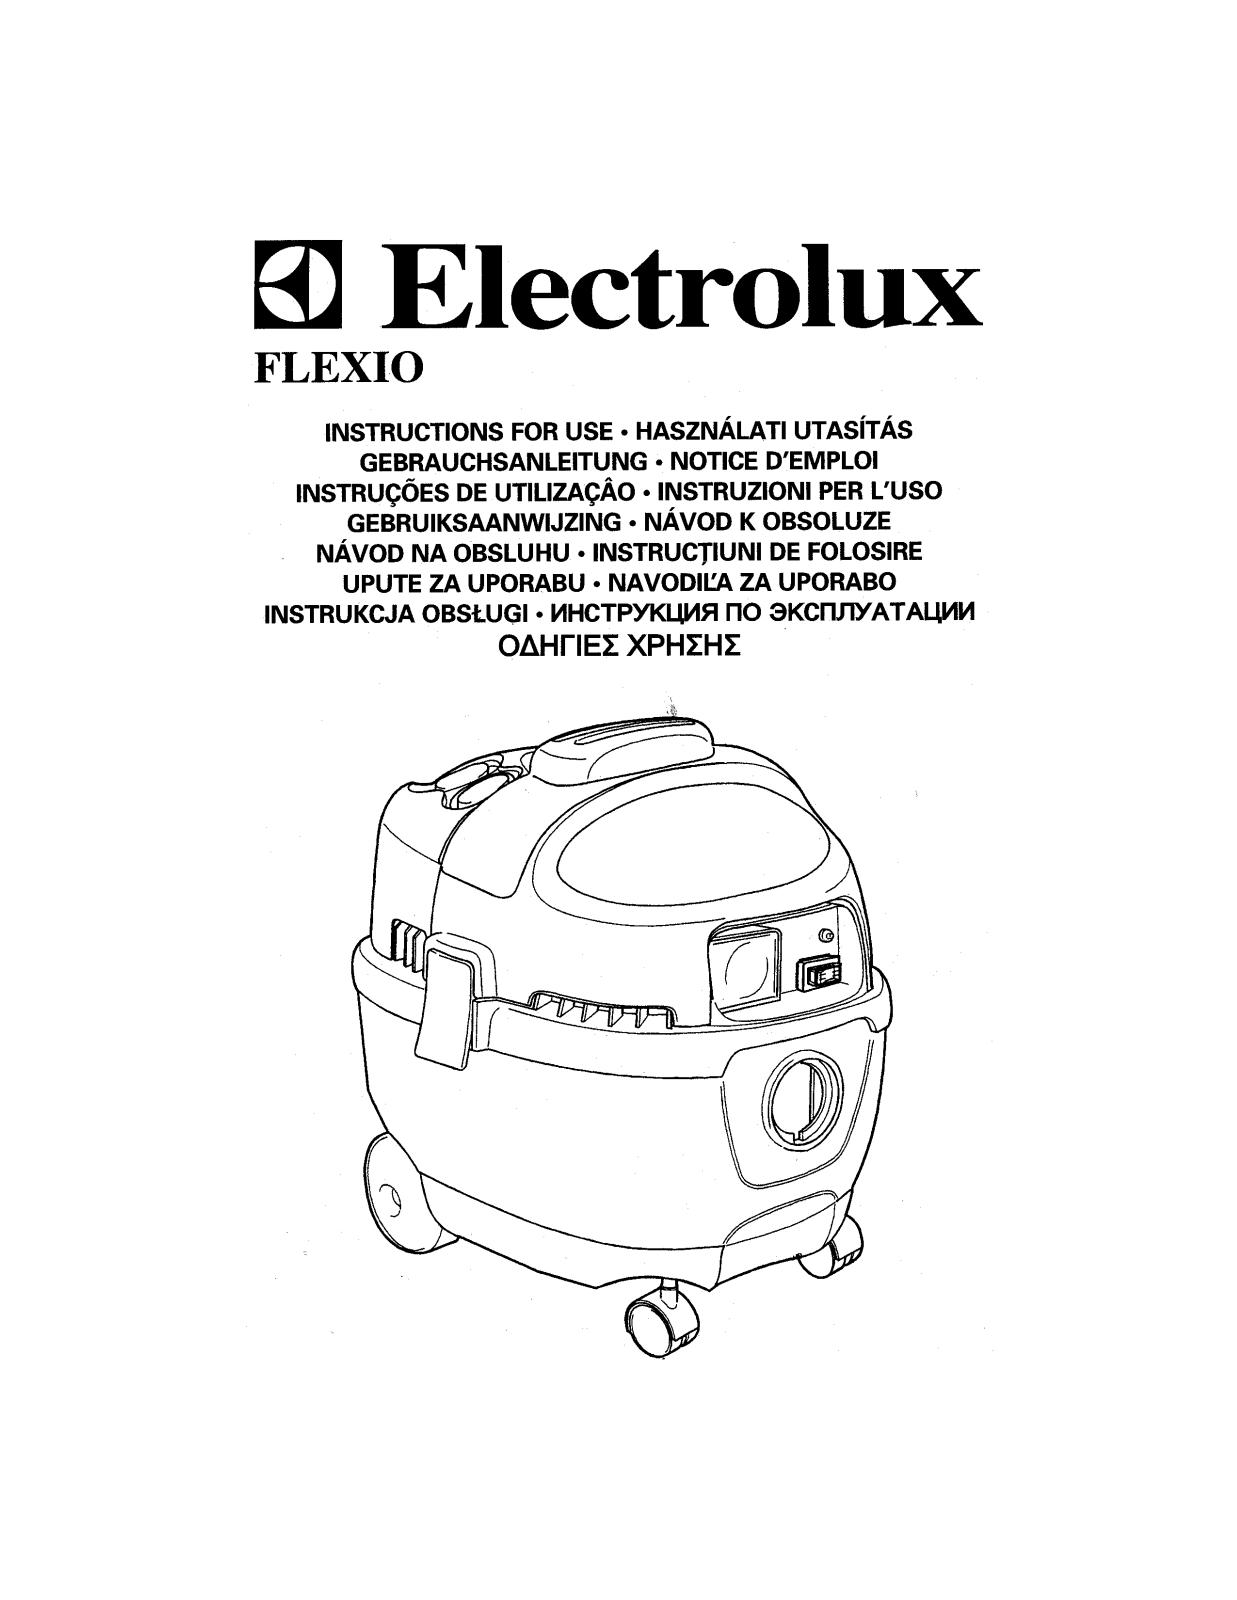 electrolux Flexio series User Manual